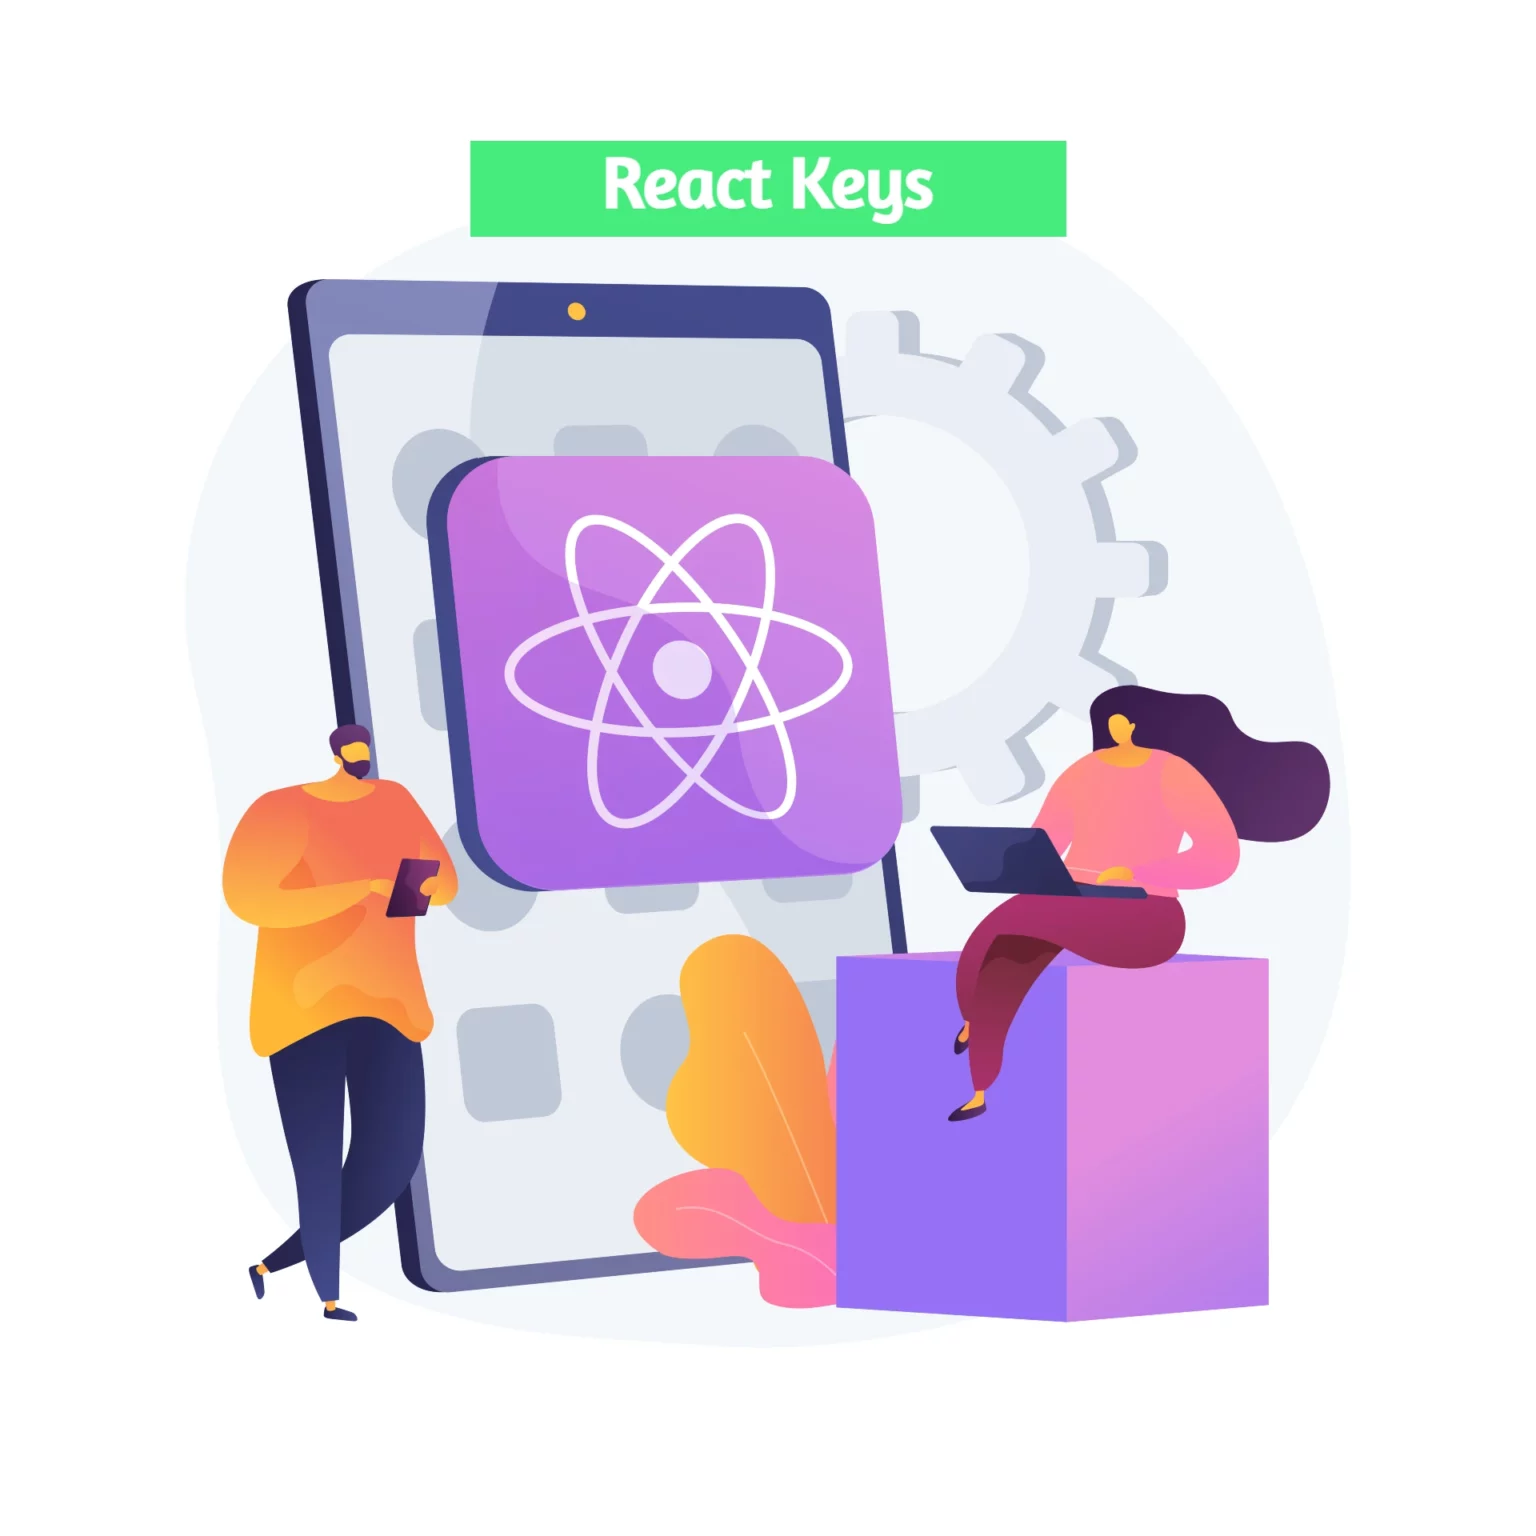 React Keys | How to use React Keys